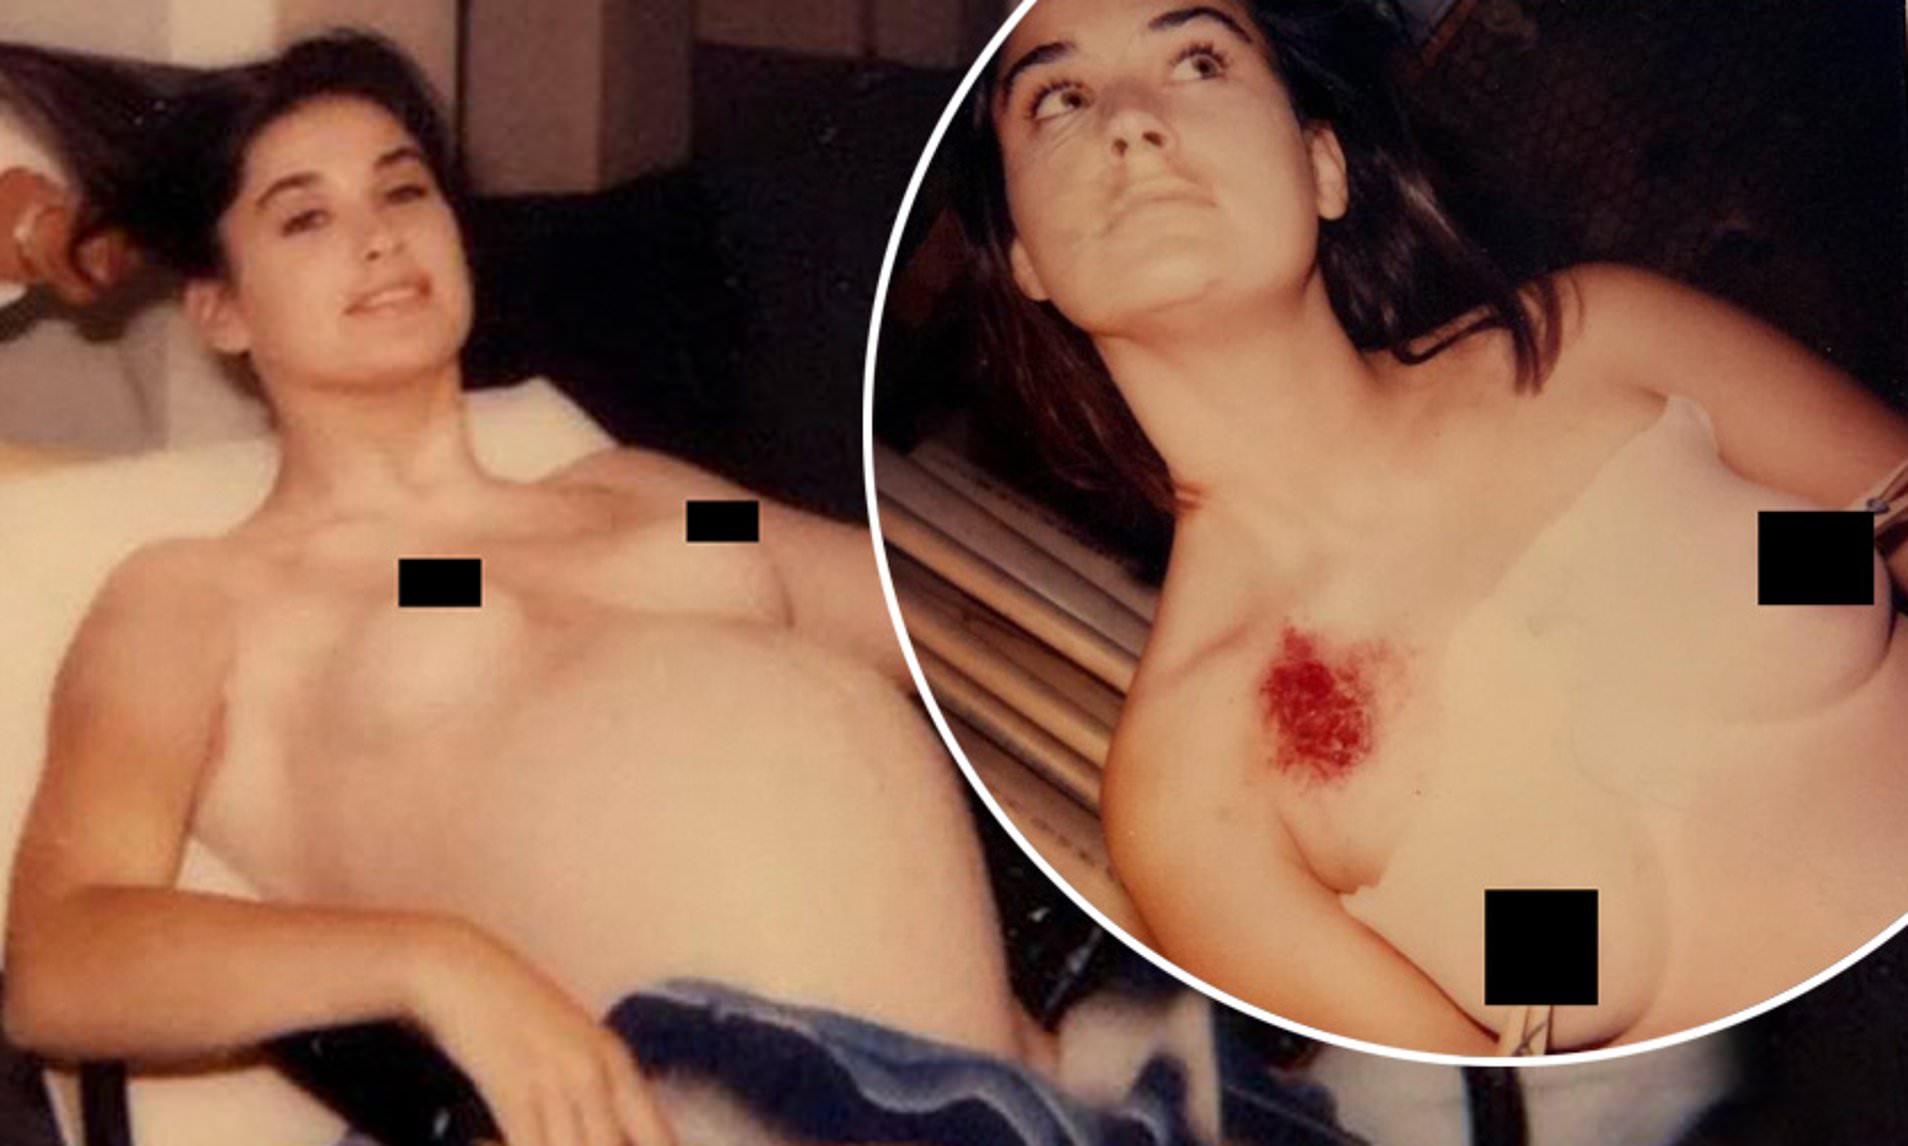 dakota owen share demi moore boobs photos